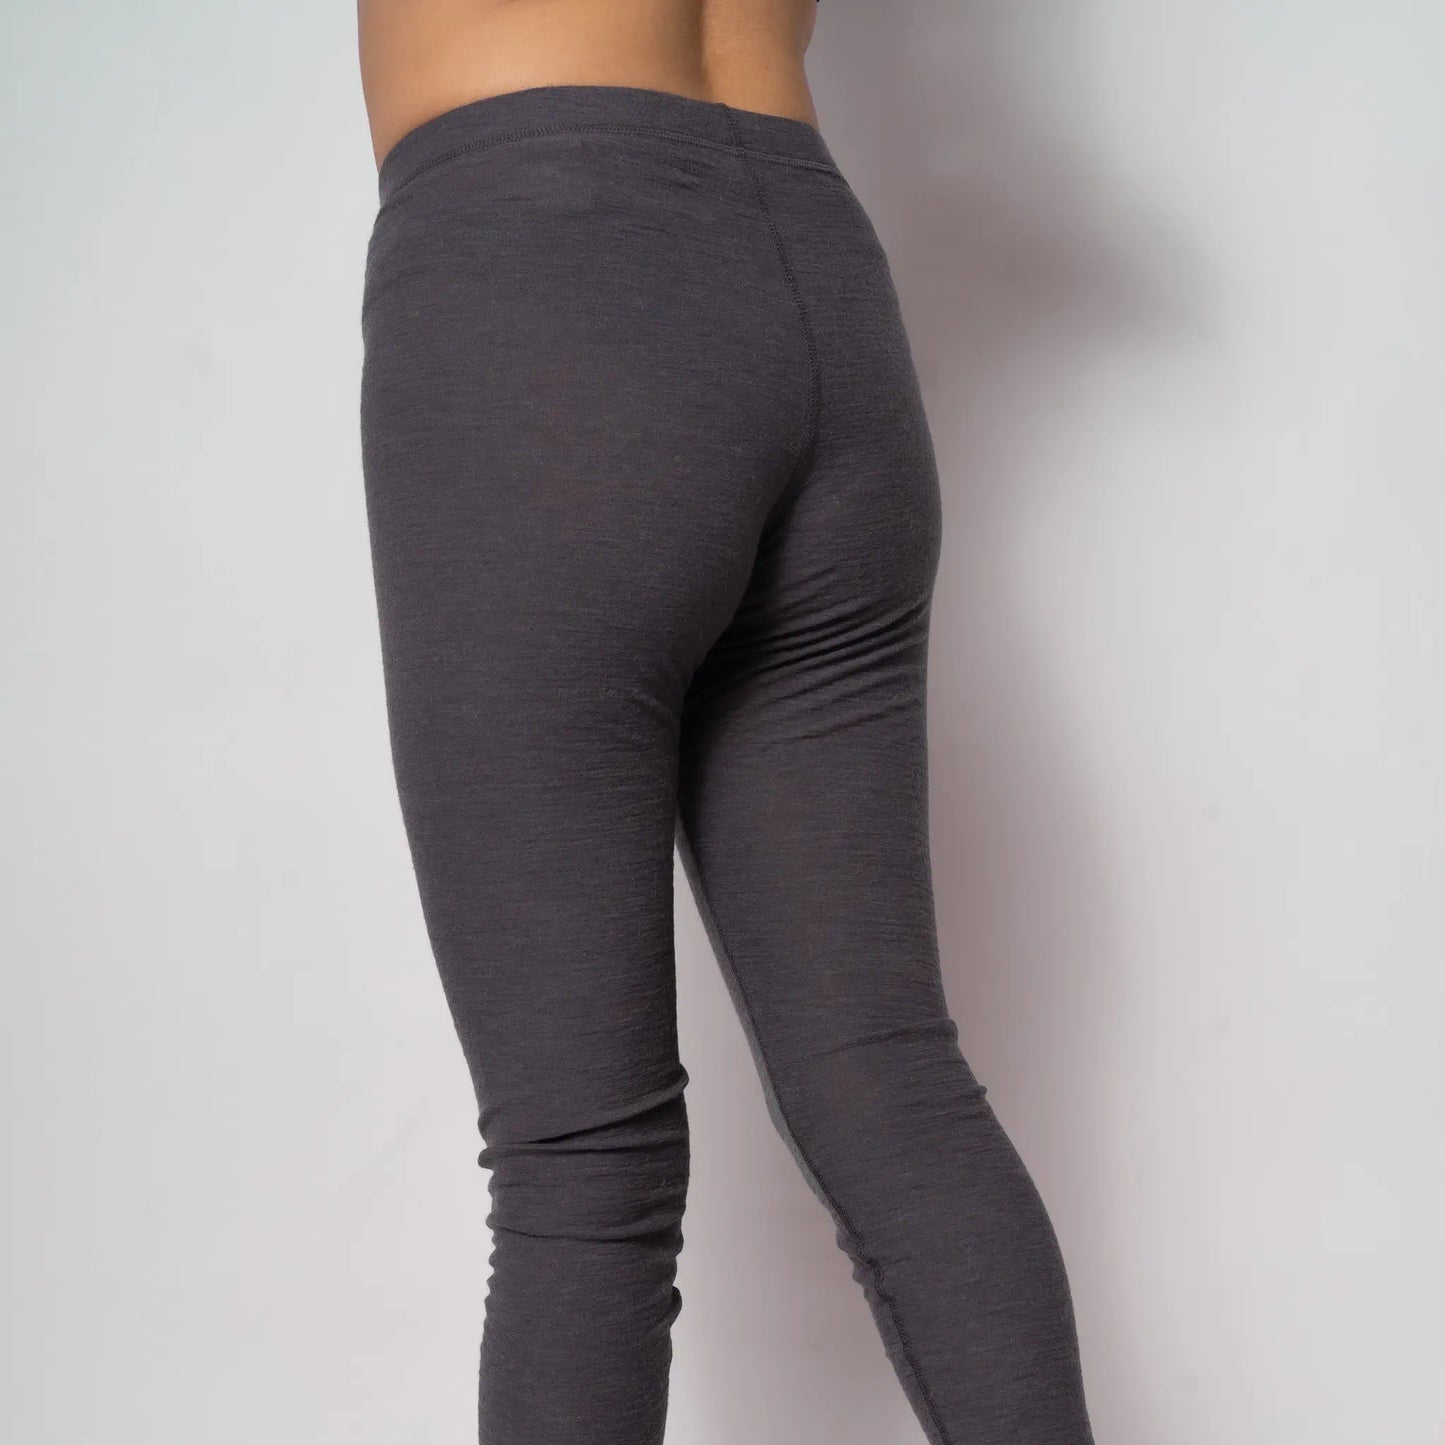 womens leggings ultralight160 comfortable fit color gray